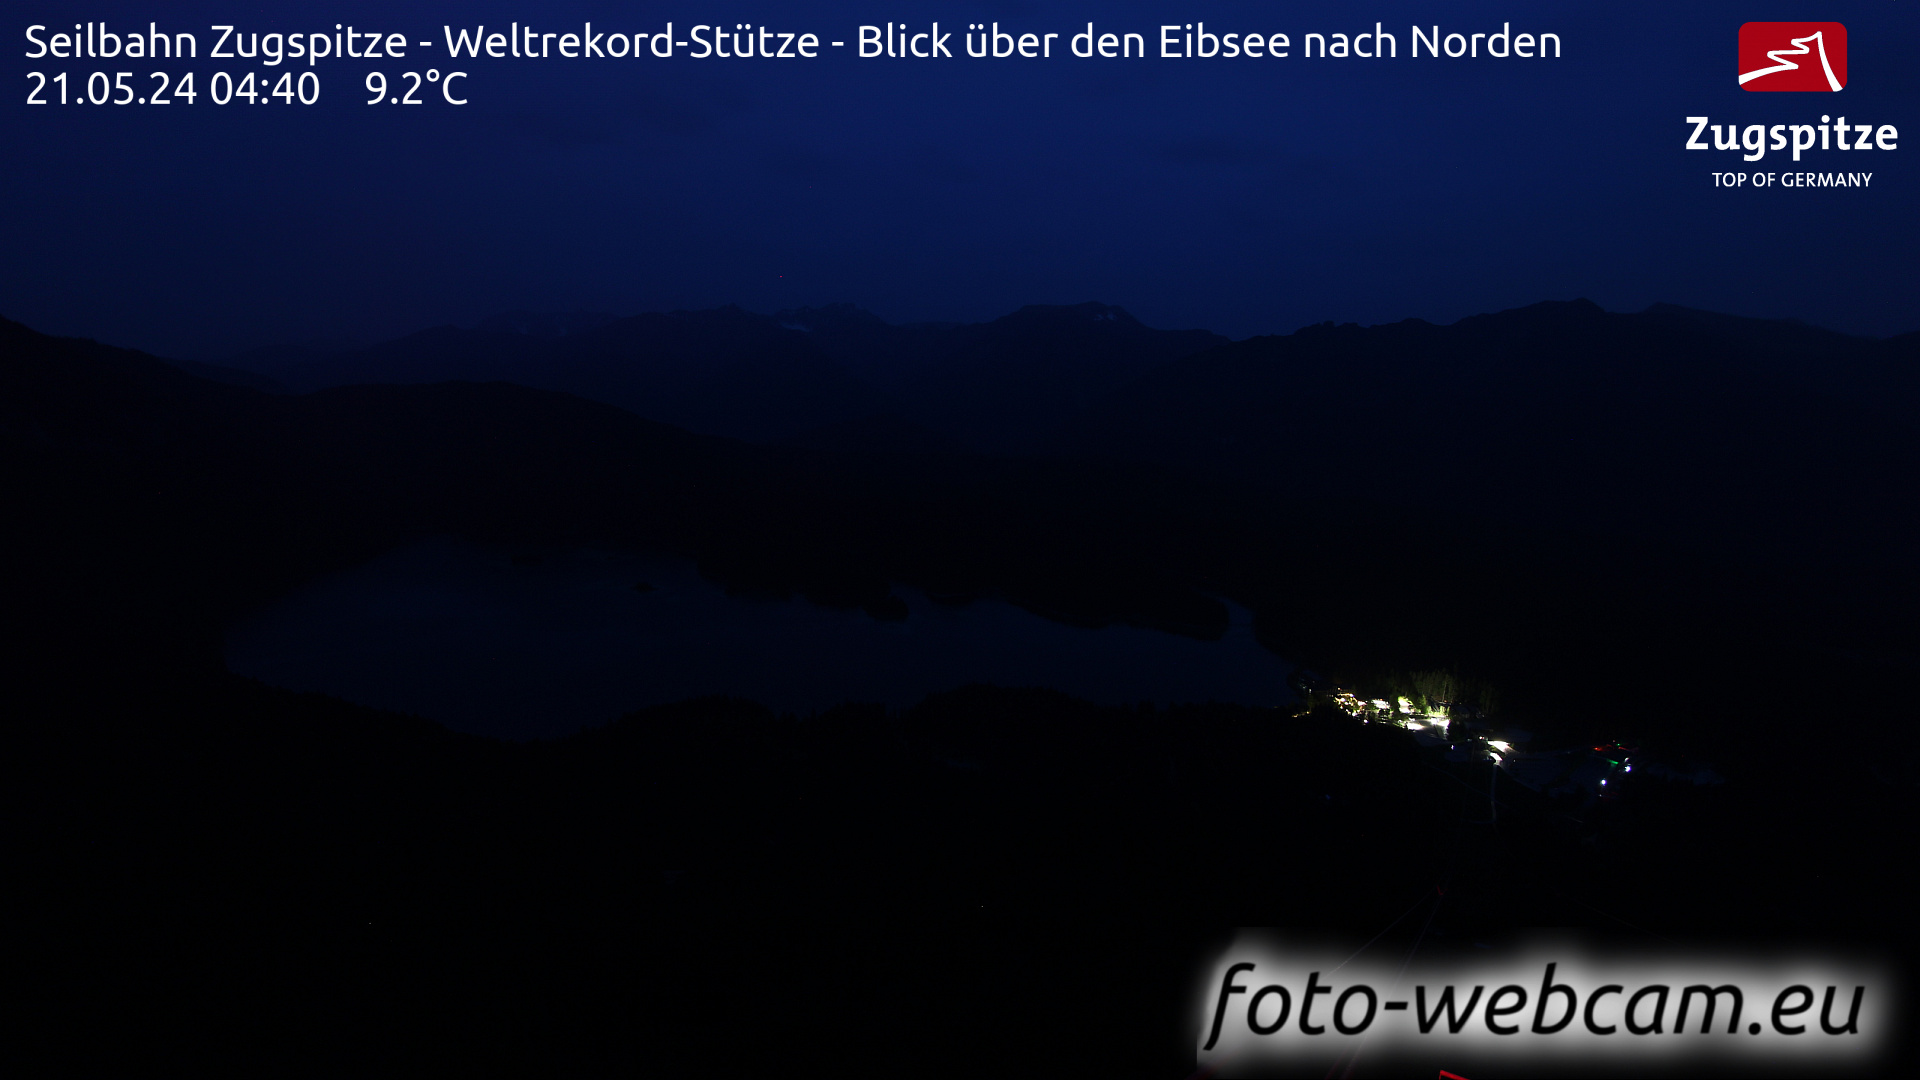 Zugspitze Lun. 04:49